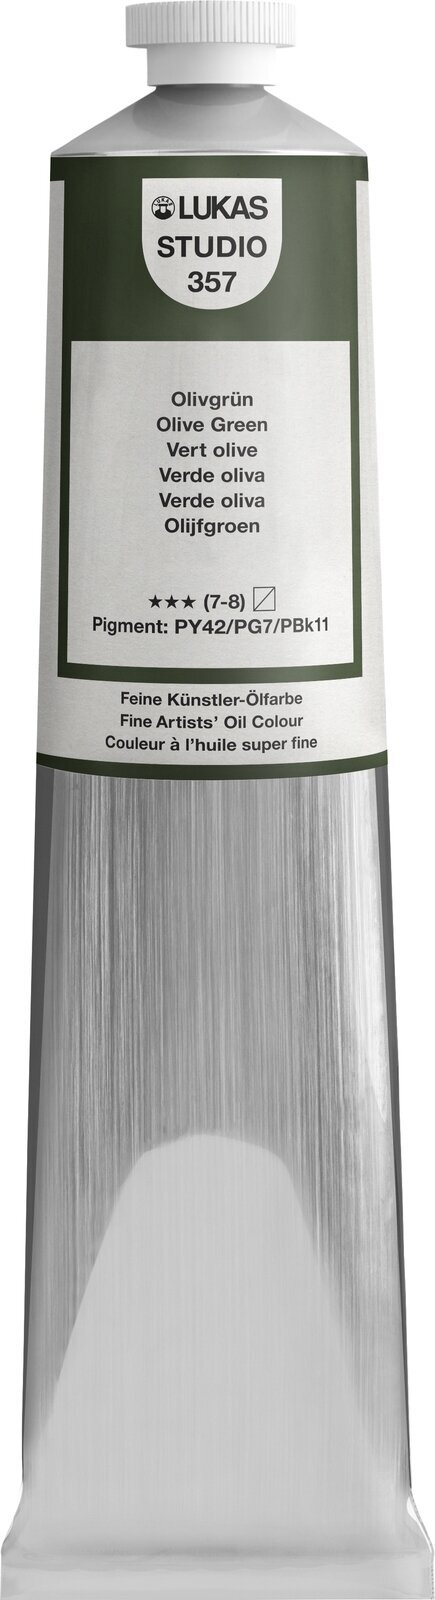 Ölfarbe Lukas Studio Oil Paint Aluminium Tube Ölgemälde Olive Green 200 ml 1 Stck